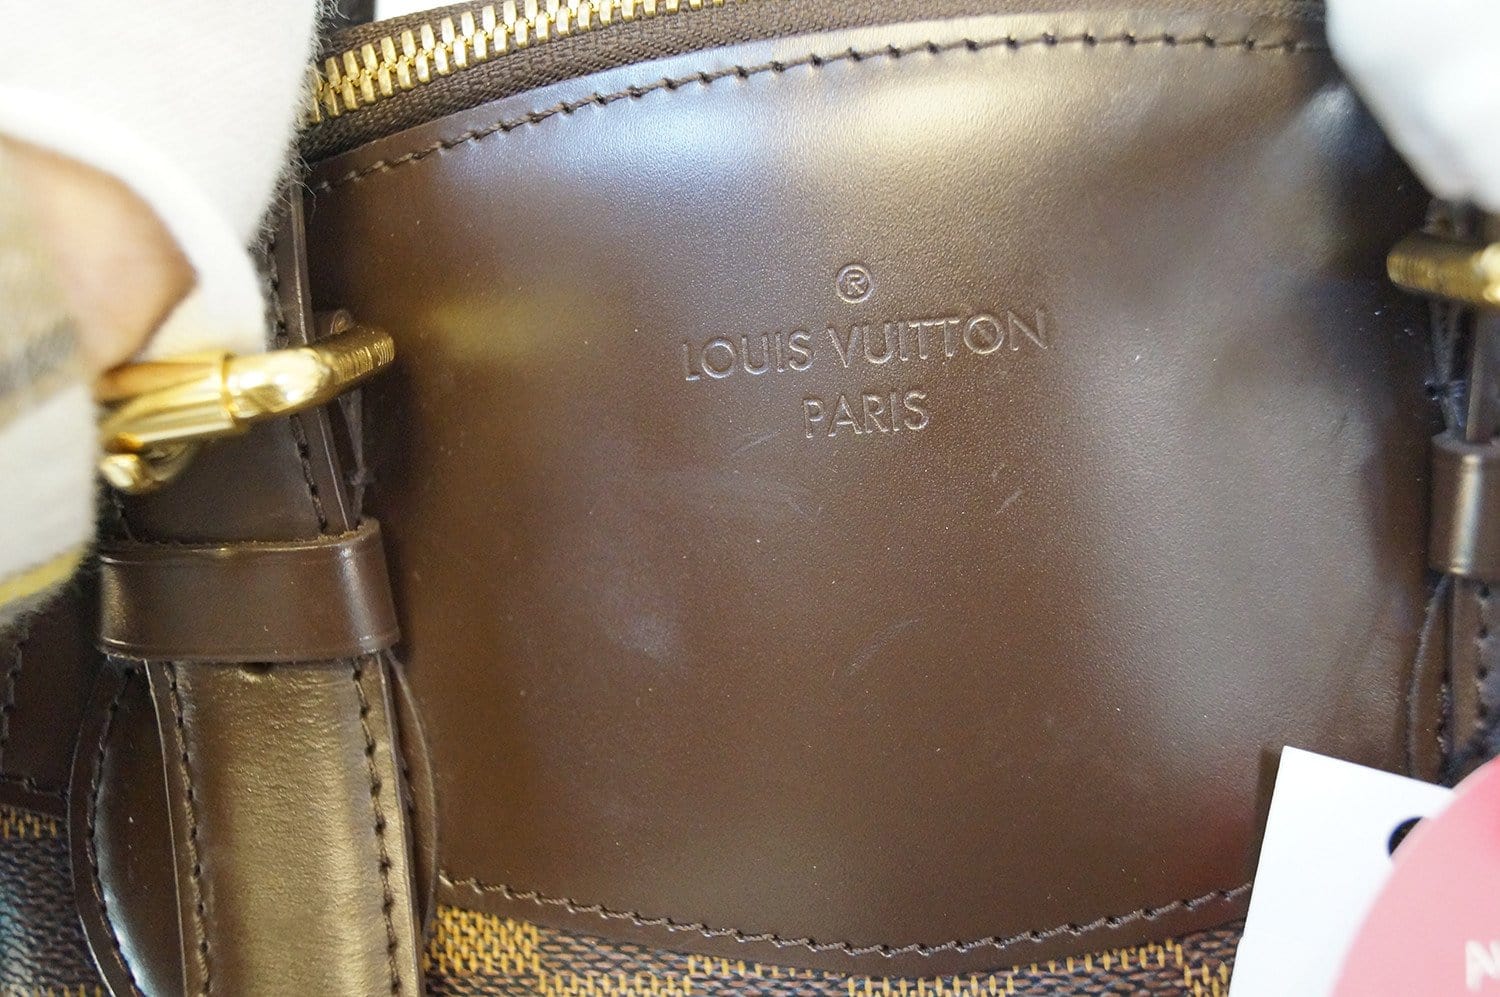 Louis Vuitton, Bags, Sold Outauthentic Louis Vuitton Verona Mm